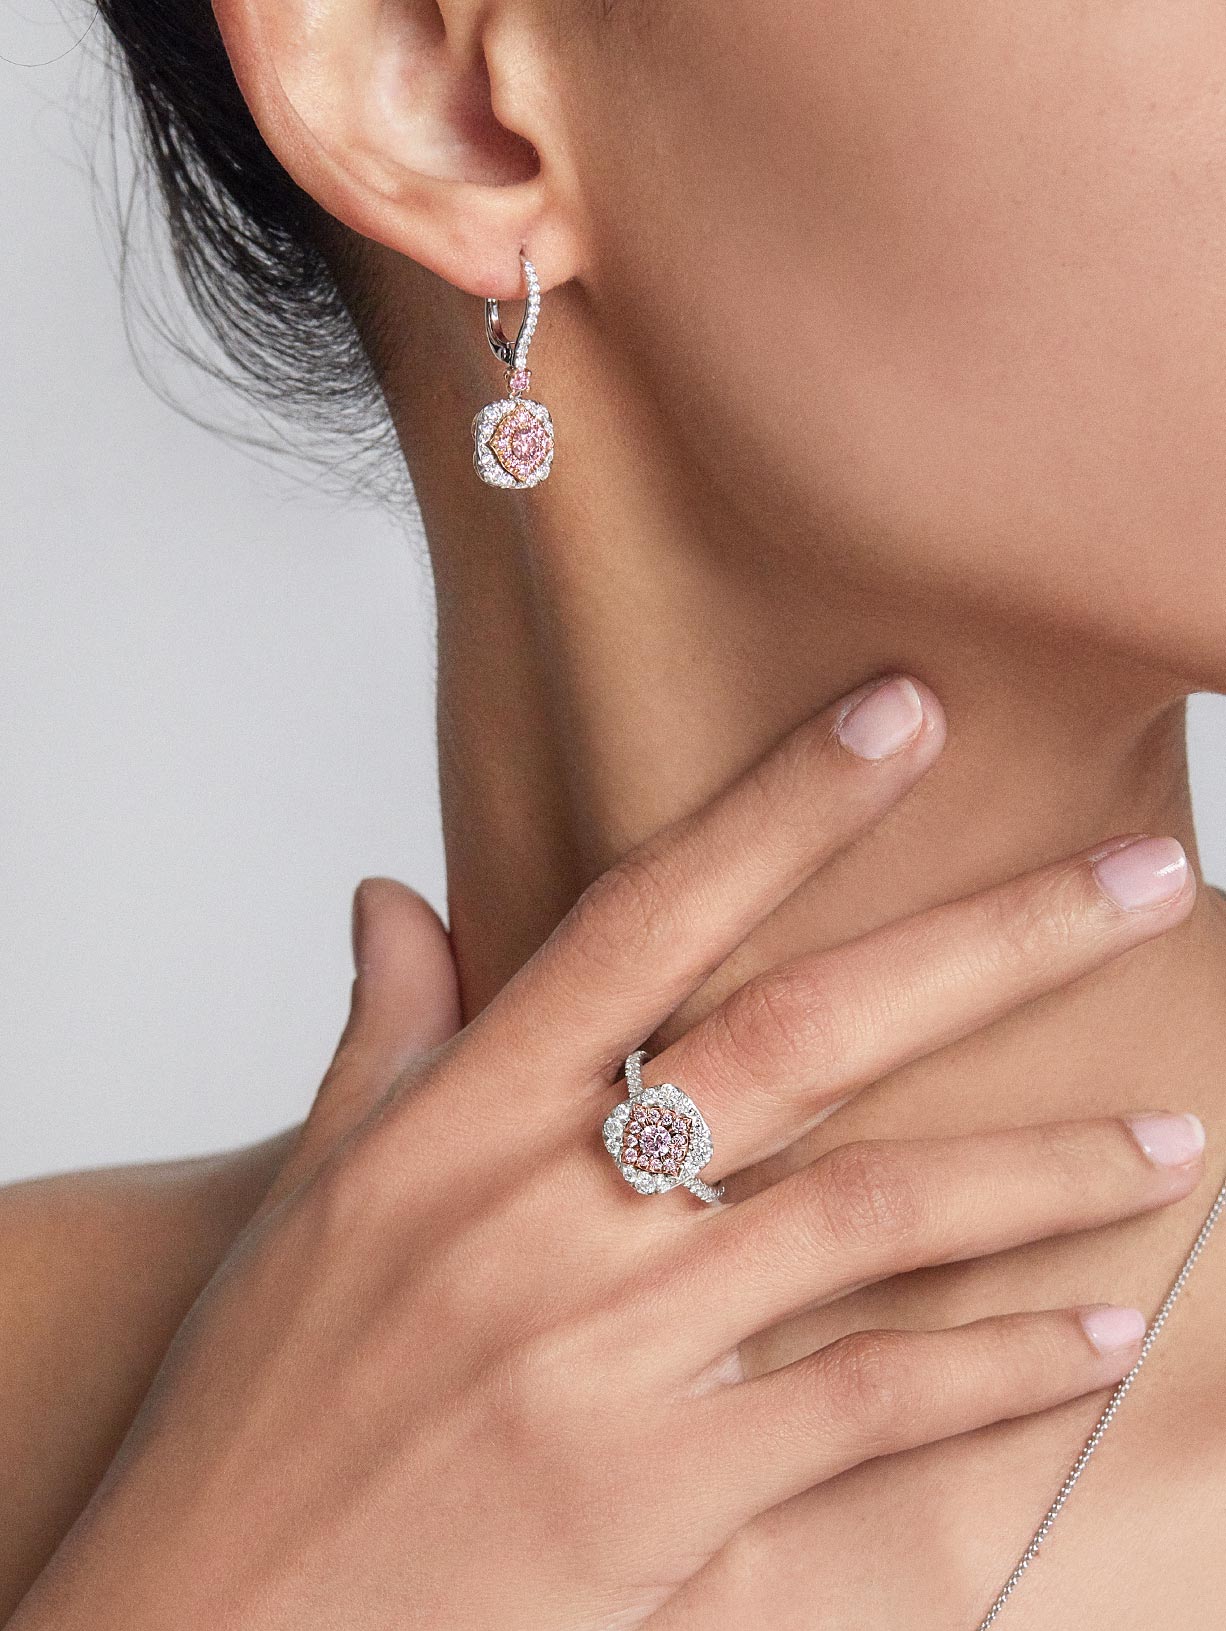 Argyle Pink™ Diamond Halo Earrings - Pink Diamonds, J FINE - J Fine, earrings - Pink Diamond Jewelry, argyle-pink™-diamond-halo-earrings-by-j-f-i-n-e-v - Argyle Pink Diamonds